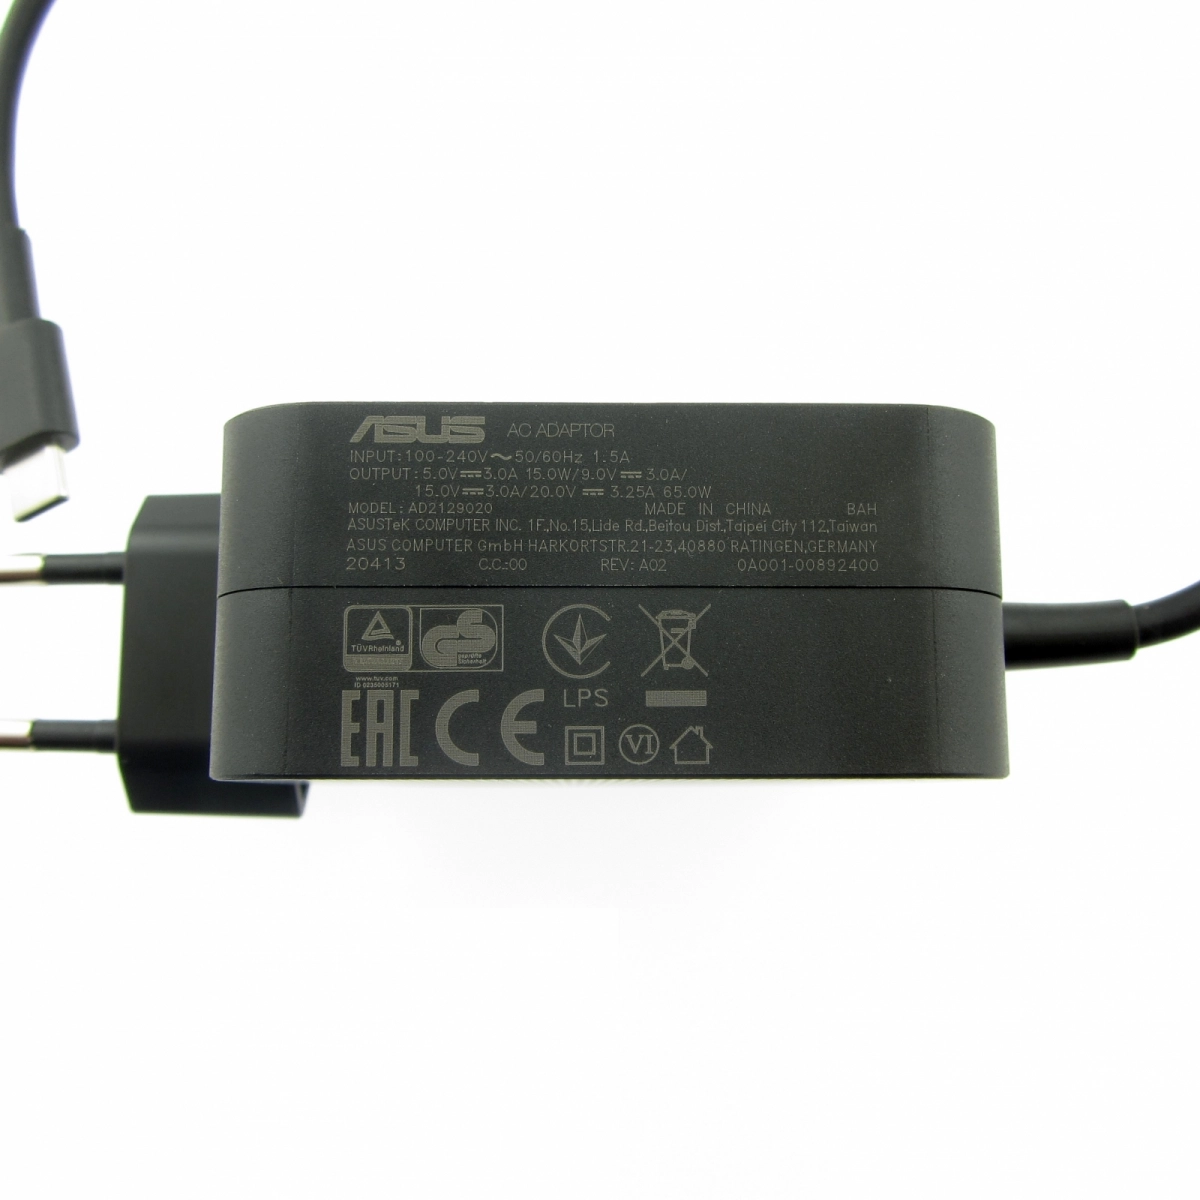 Original Netzteil für ASUS 0A001-00443900, 20V, 3.25A, Stecker USB-C, 65W